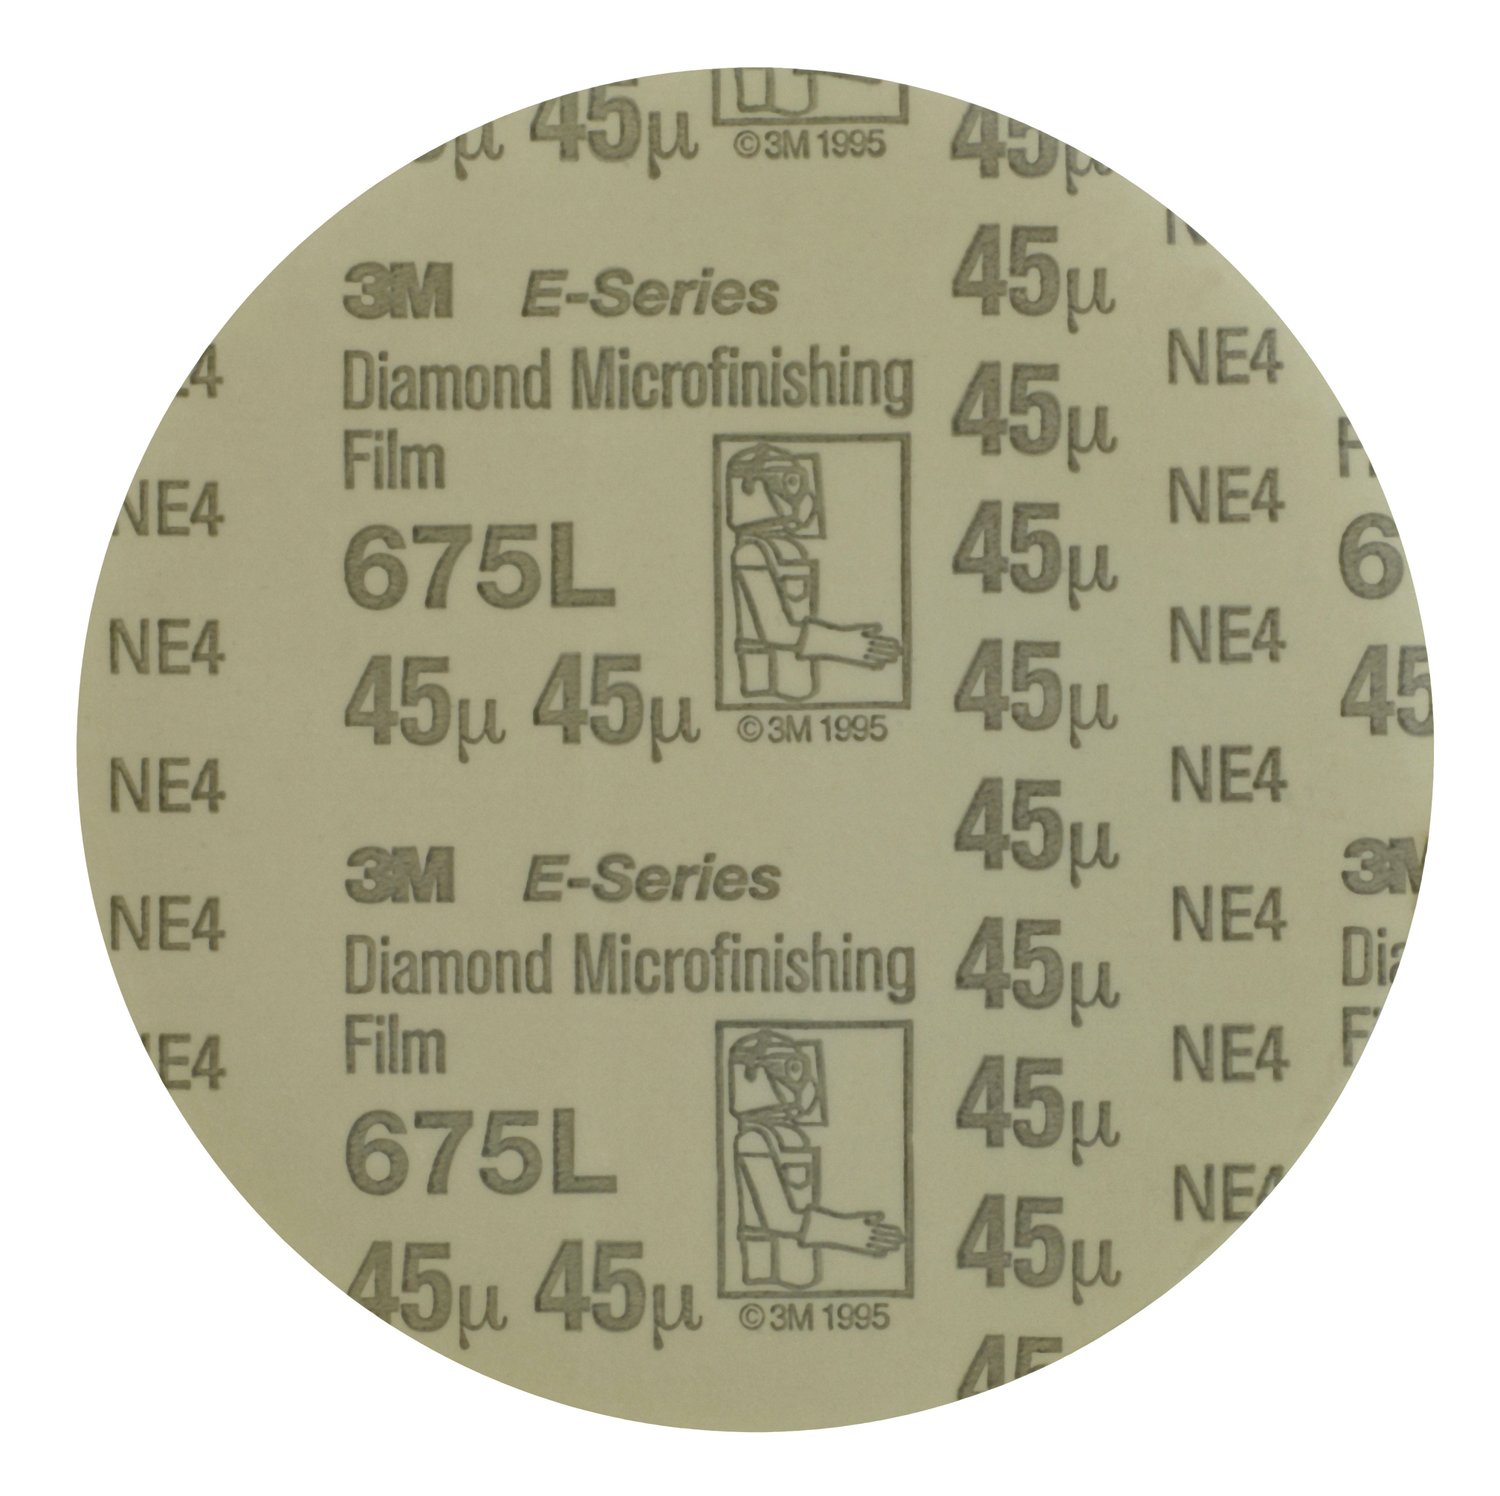 7100045788 - 3M Diamond Microfinishing Film Disc 675L, 45 Mic, Config